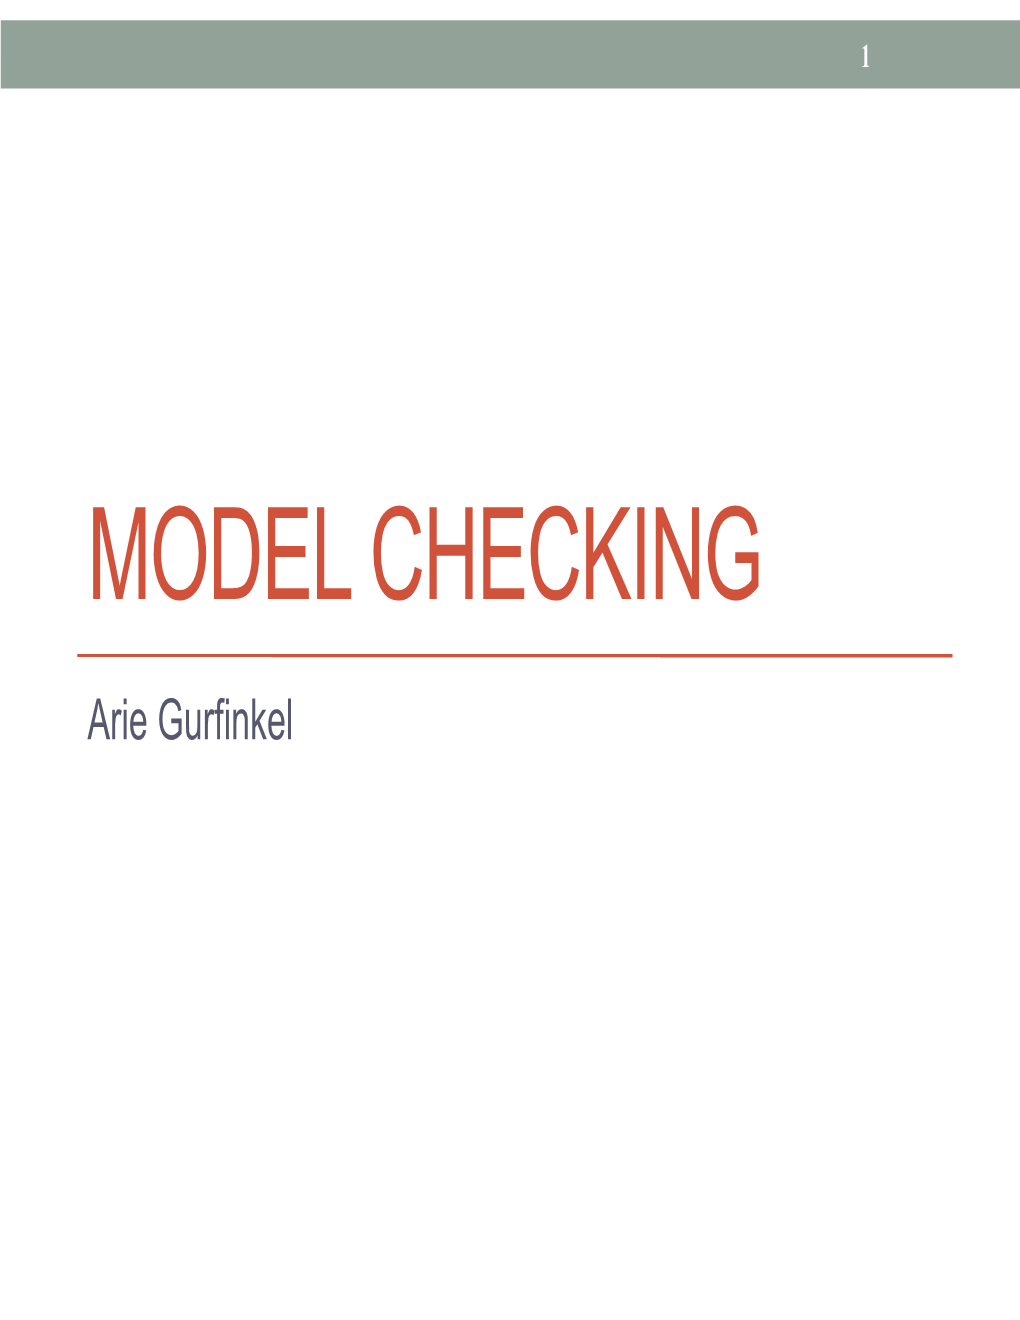 Model Checking